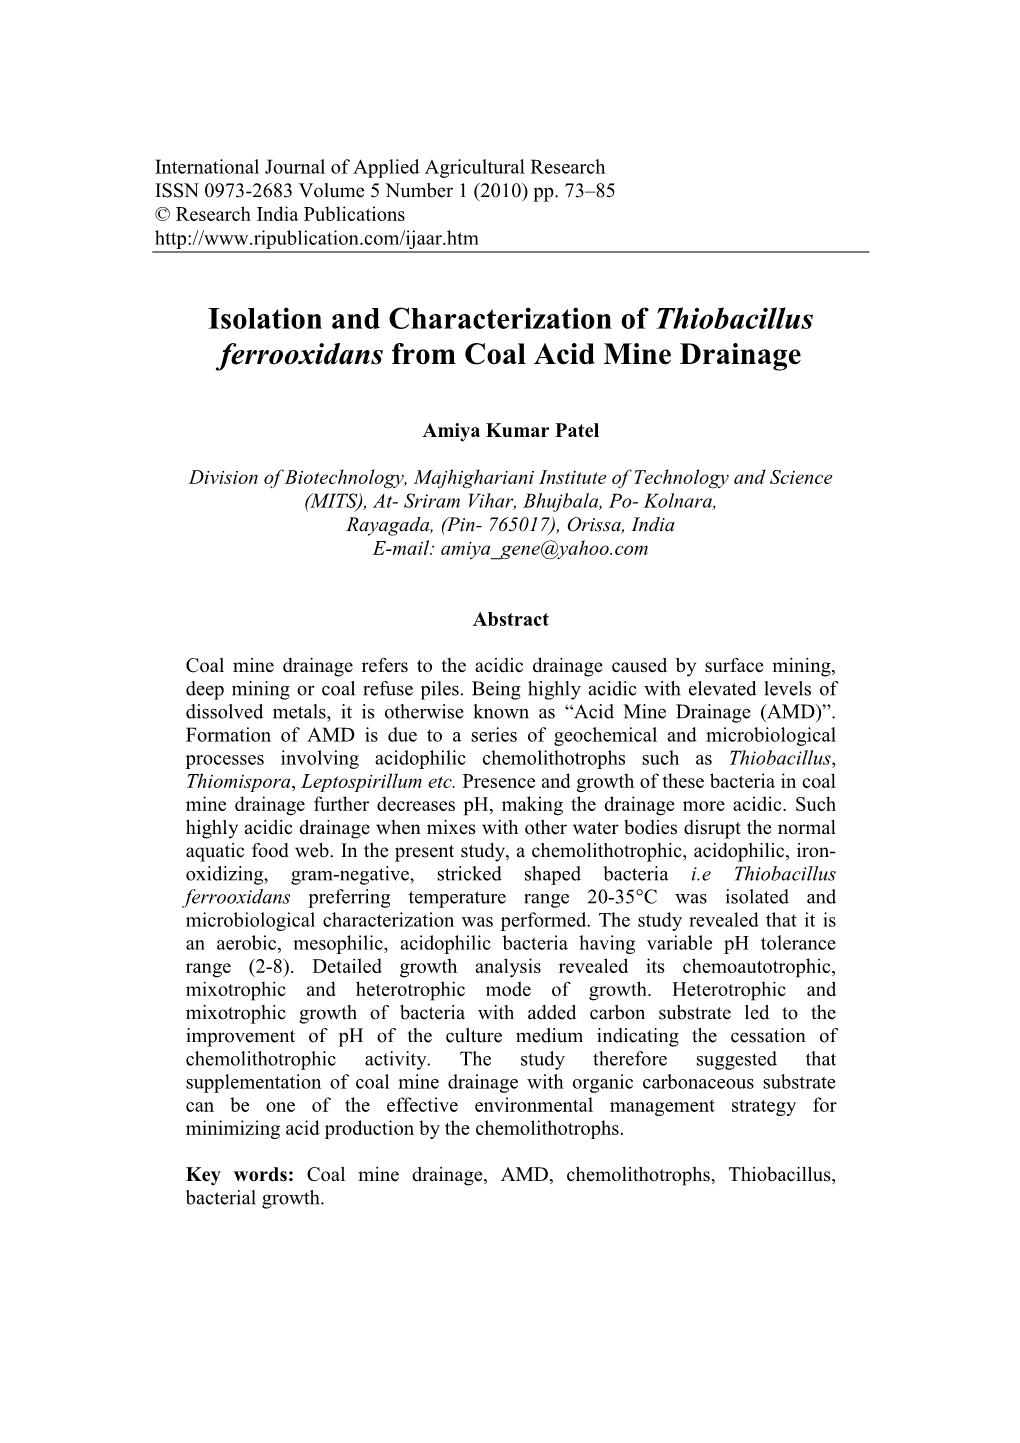 Isolation and Characterization of Thiobacillus Ferrooxidans from Coal Acid Mine Drainage